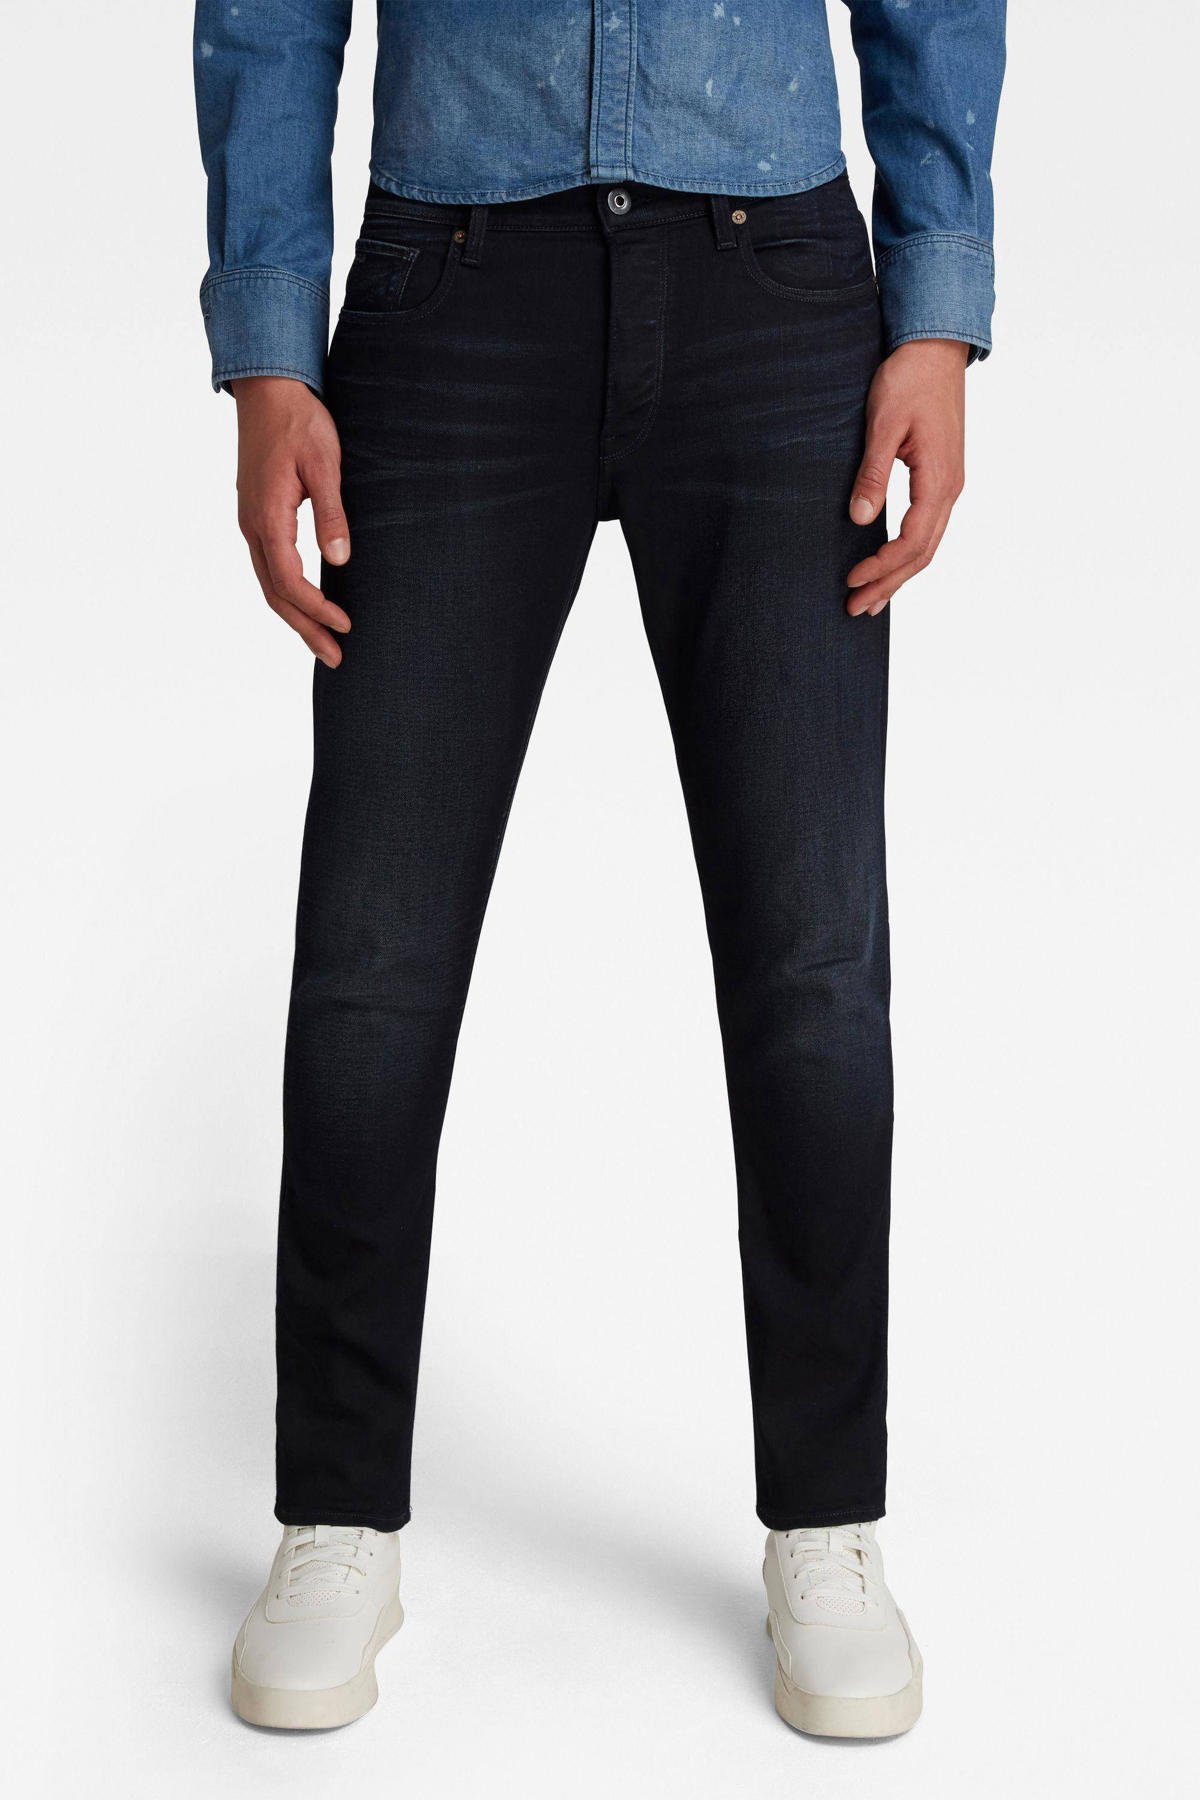 Mooi inhalen Tomaat G-Star RAW 3301 slim fit jeans dark aged | wehkamp